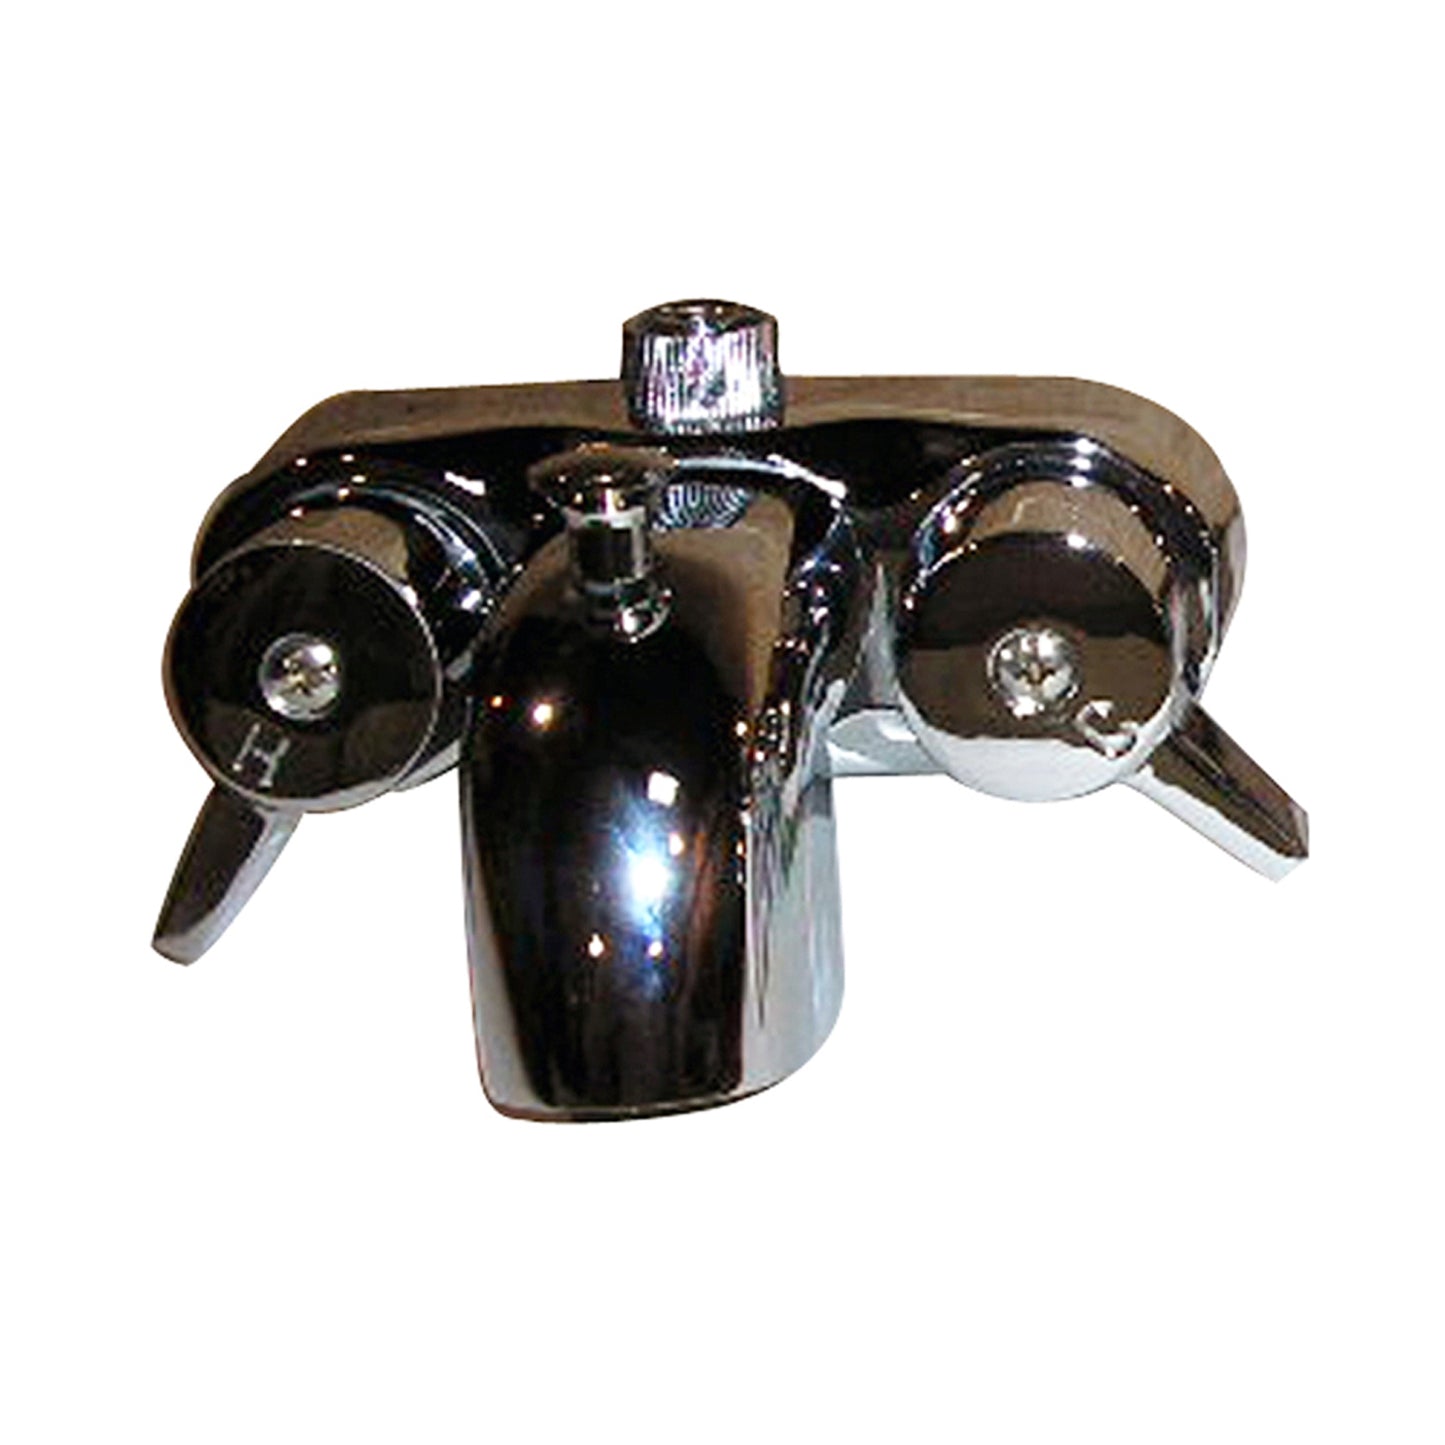 Basic Tub Faucet Kit with Riser, 60" D-Rod, Shower Head, Polished Chrome